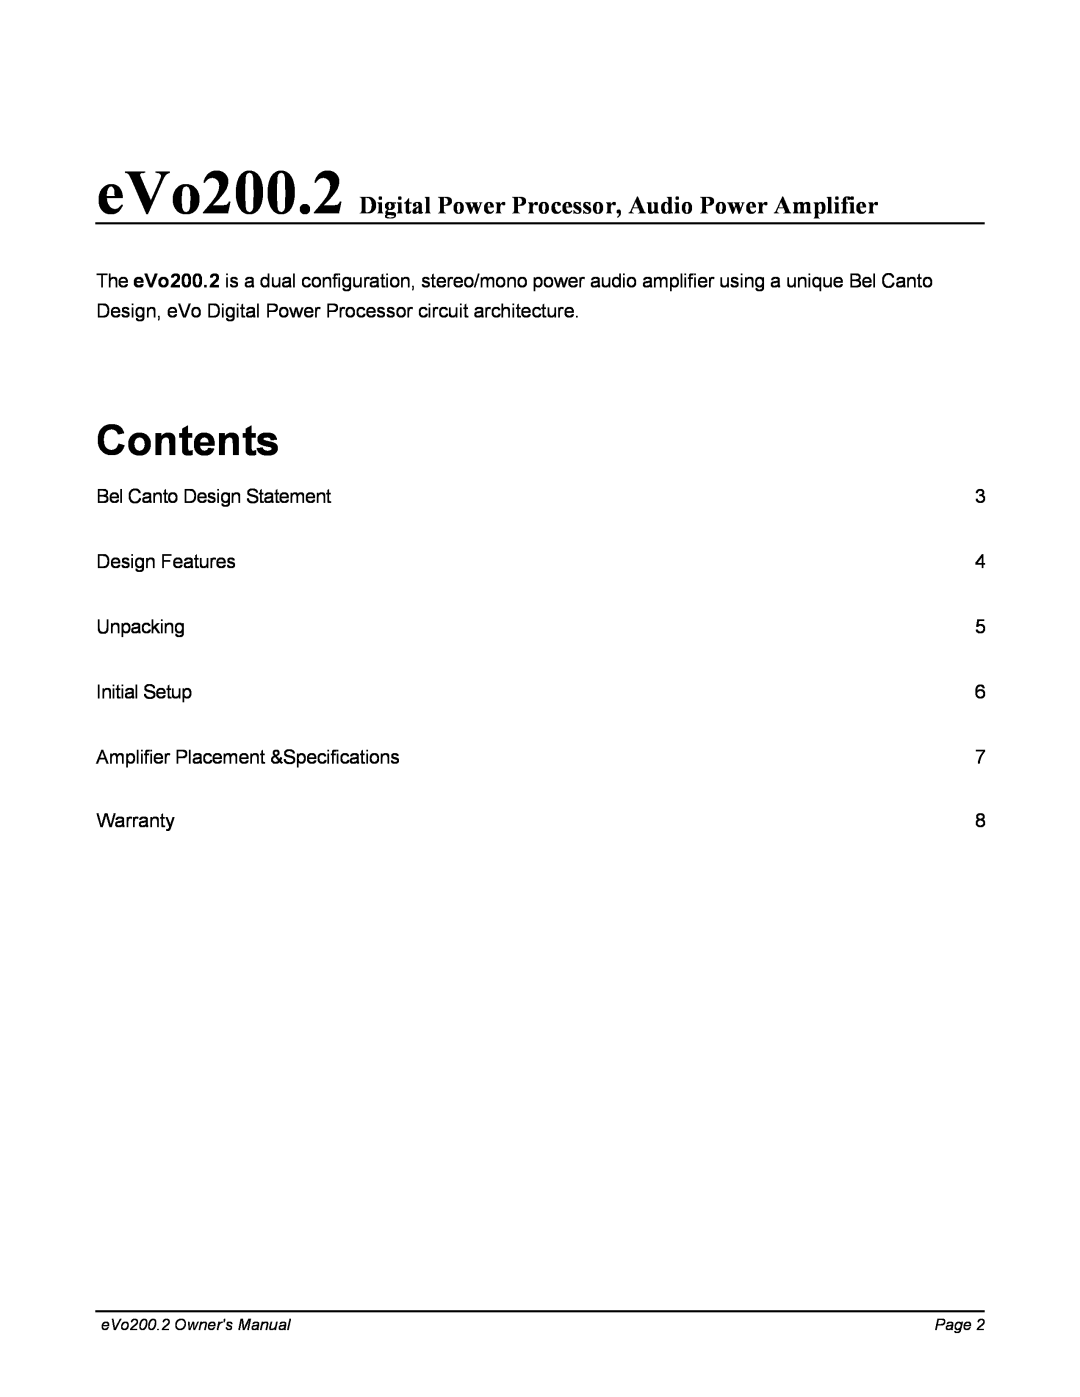 Bel Canto Design eVo200.2 manual Contents 